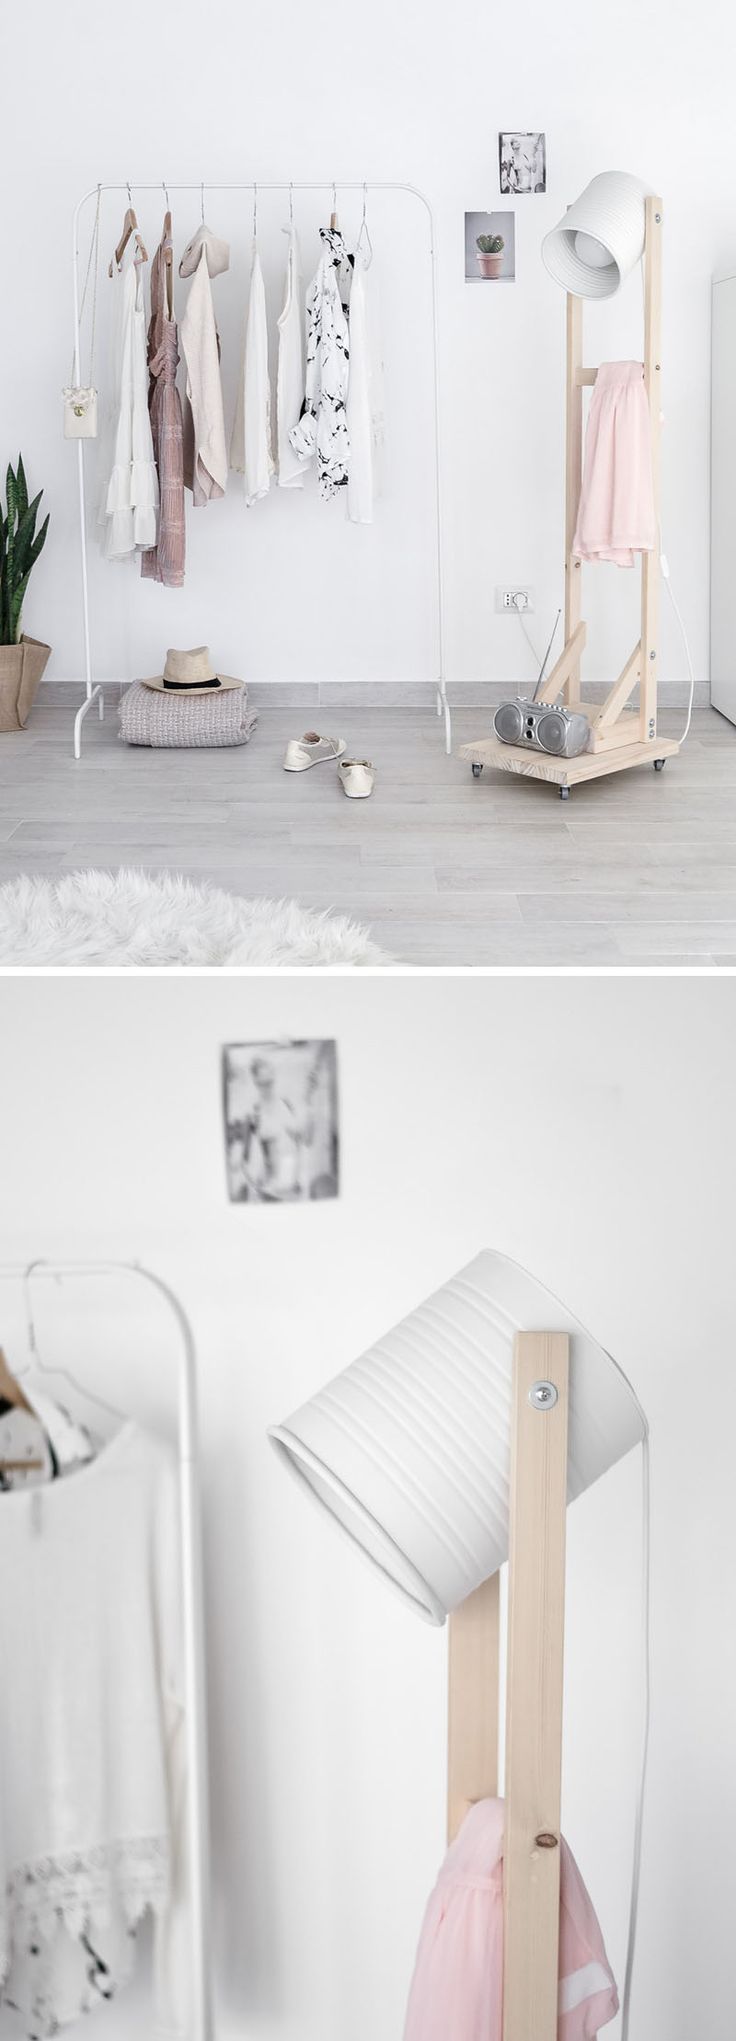 Design studio iLiui, have created this modern floor lamp that uses wood and matt...